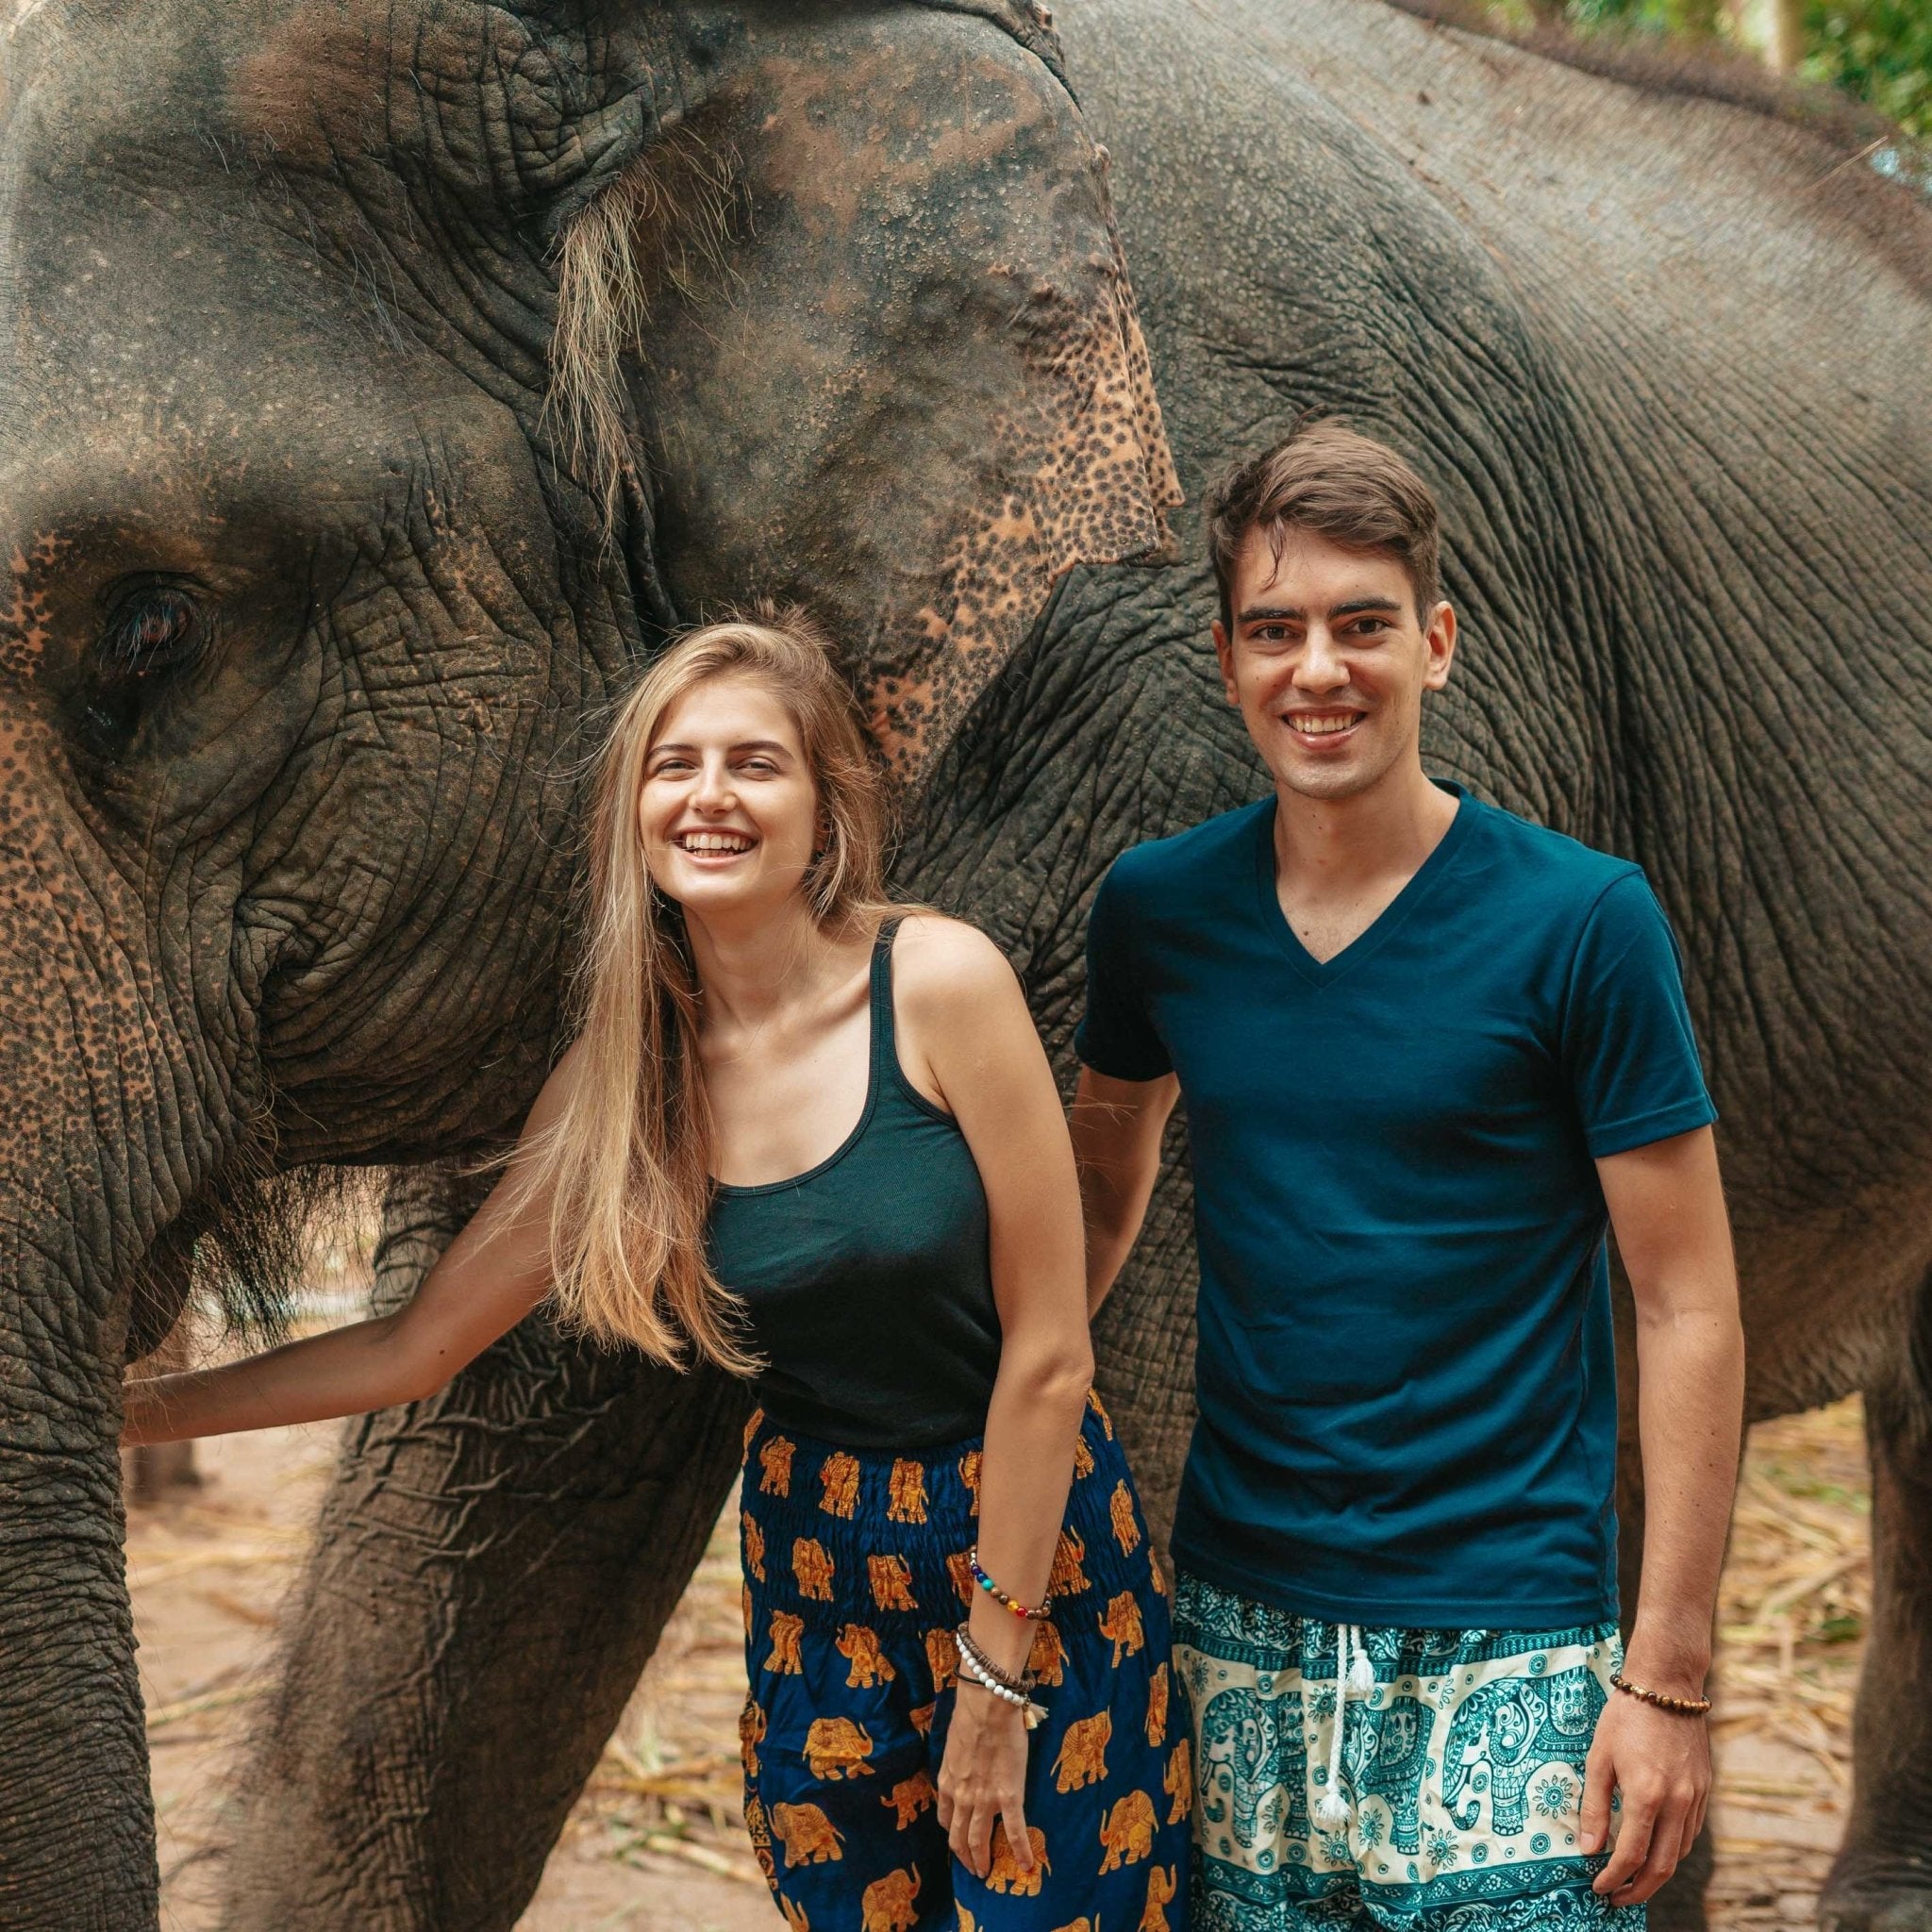 BALI MEN'S SHORTS Elepanta Men's Shorts - Buy Today Elephant Pants Jewelry And Bohemian Clothes Handmade In Thailand Help To Save The Elephants FairTrade And Vegan